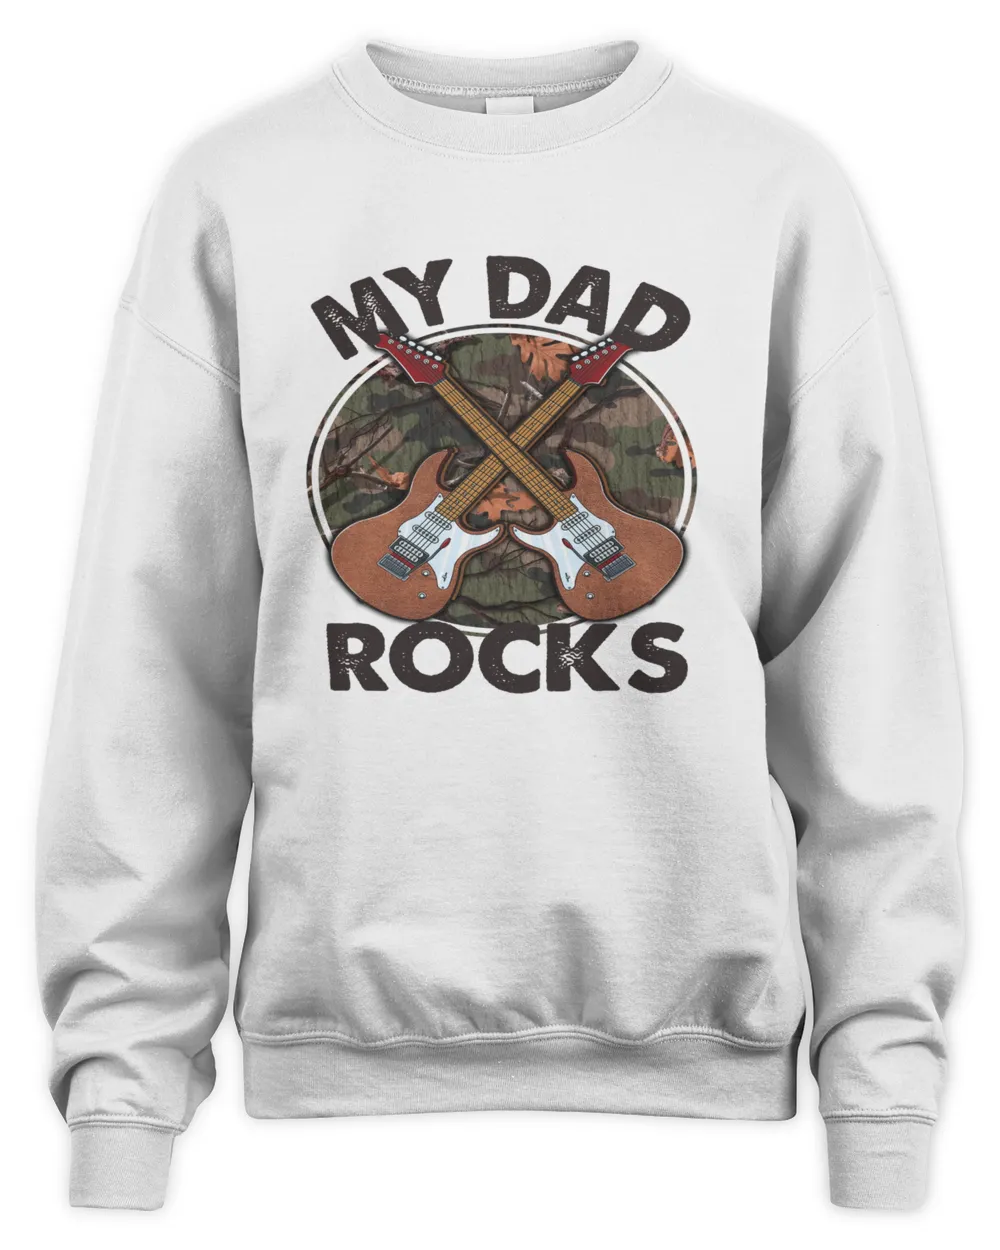 My Dad Rocks Shirt Sweatshirt Hoodie, Fathers day Shirt, Father's Day t Shirts, Fathers day Shirt Idea NLSFD045